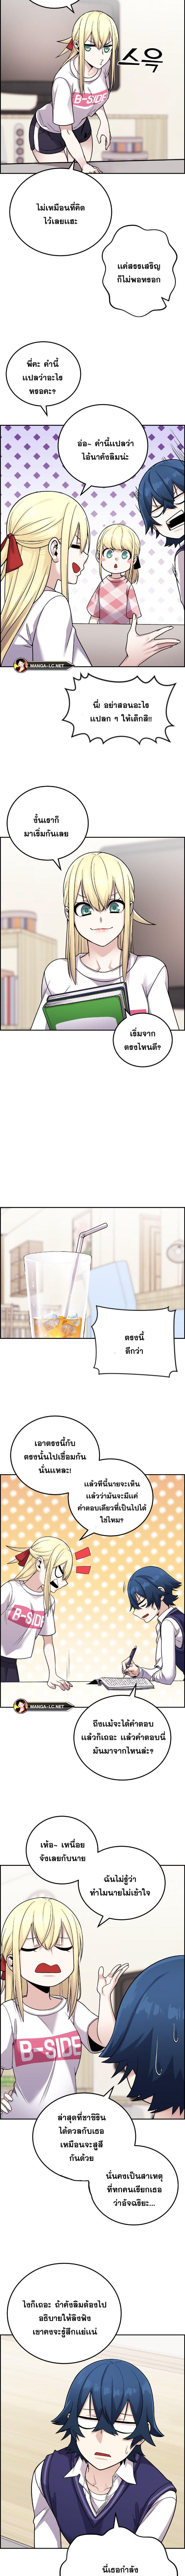 Webtoon Character Na Kang Lim ร ยธโ€ขร ยธยญร ยธโขร ยธโ€”ร ยธยตร ยนห 30 (10)